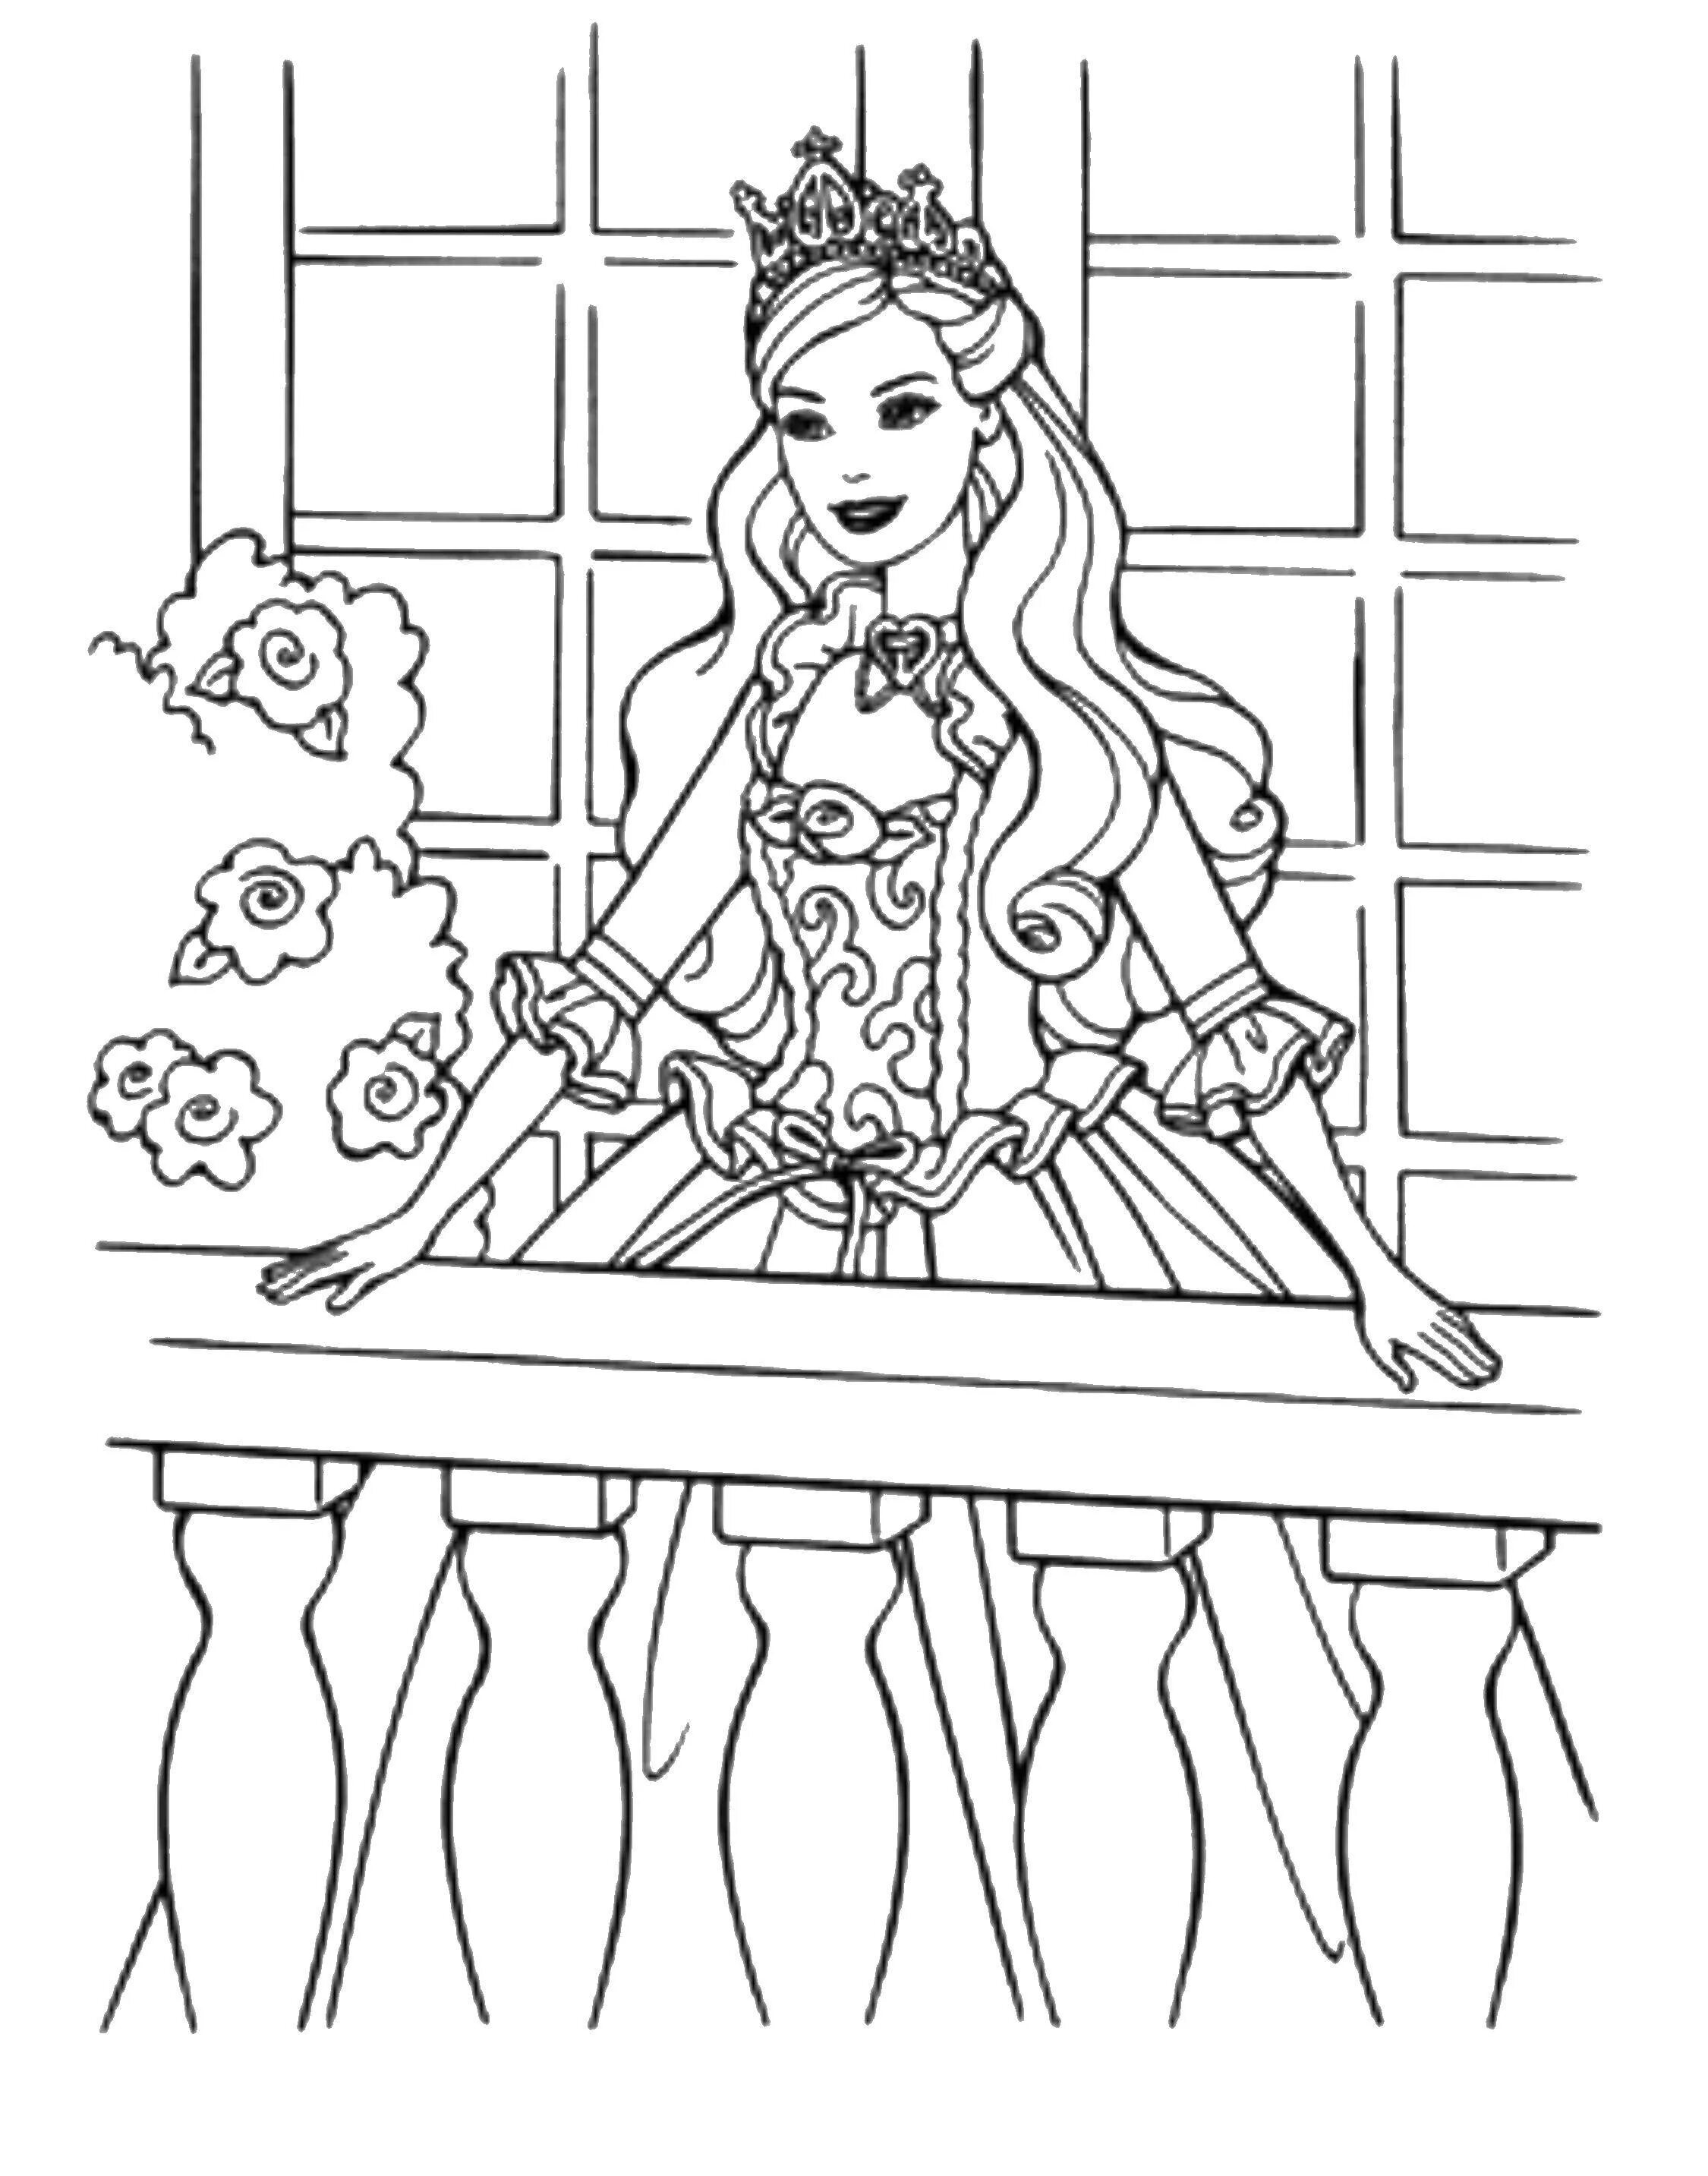 Adorable princess coloring page